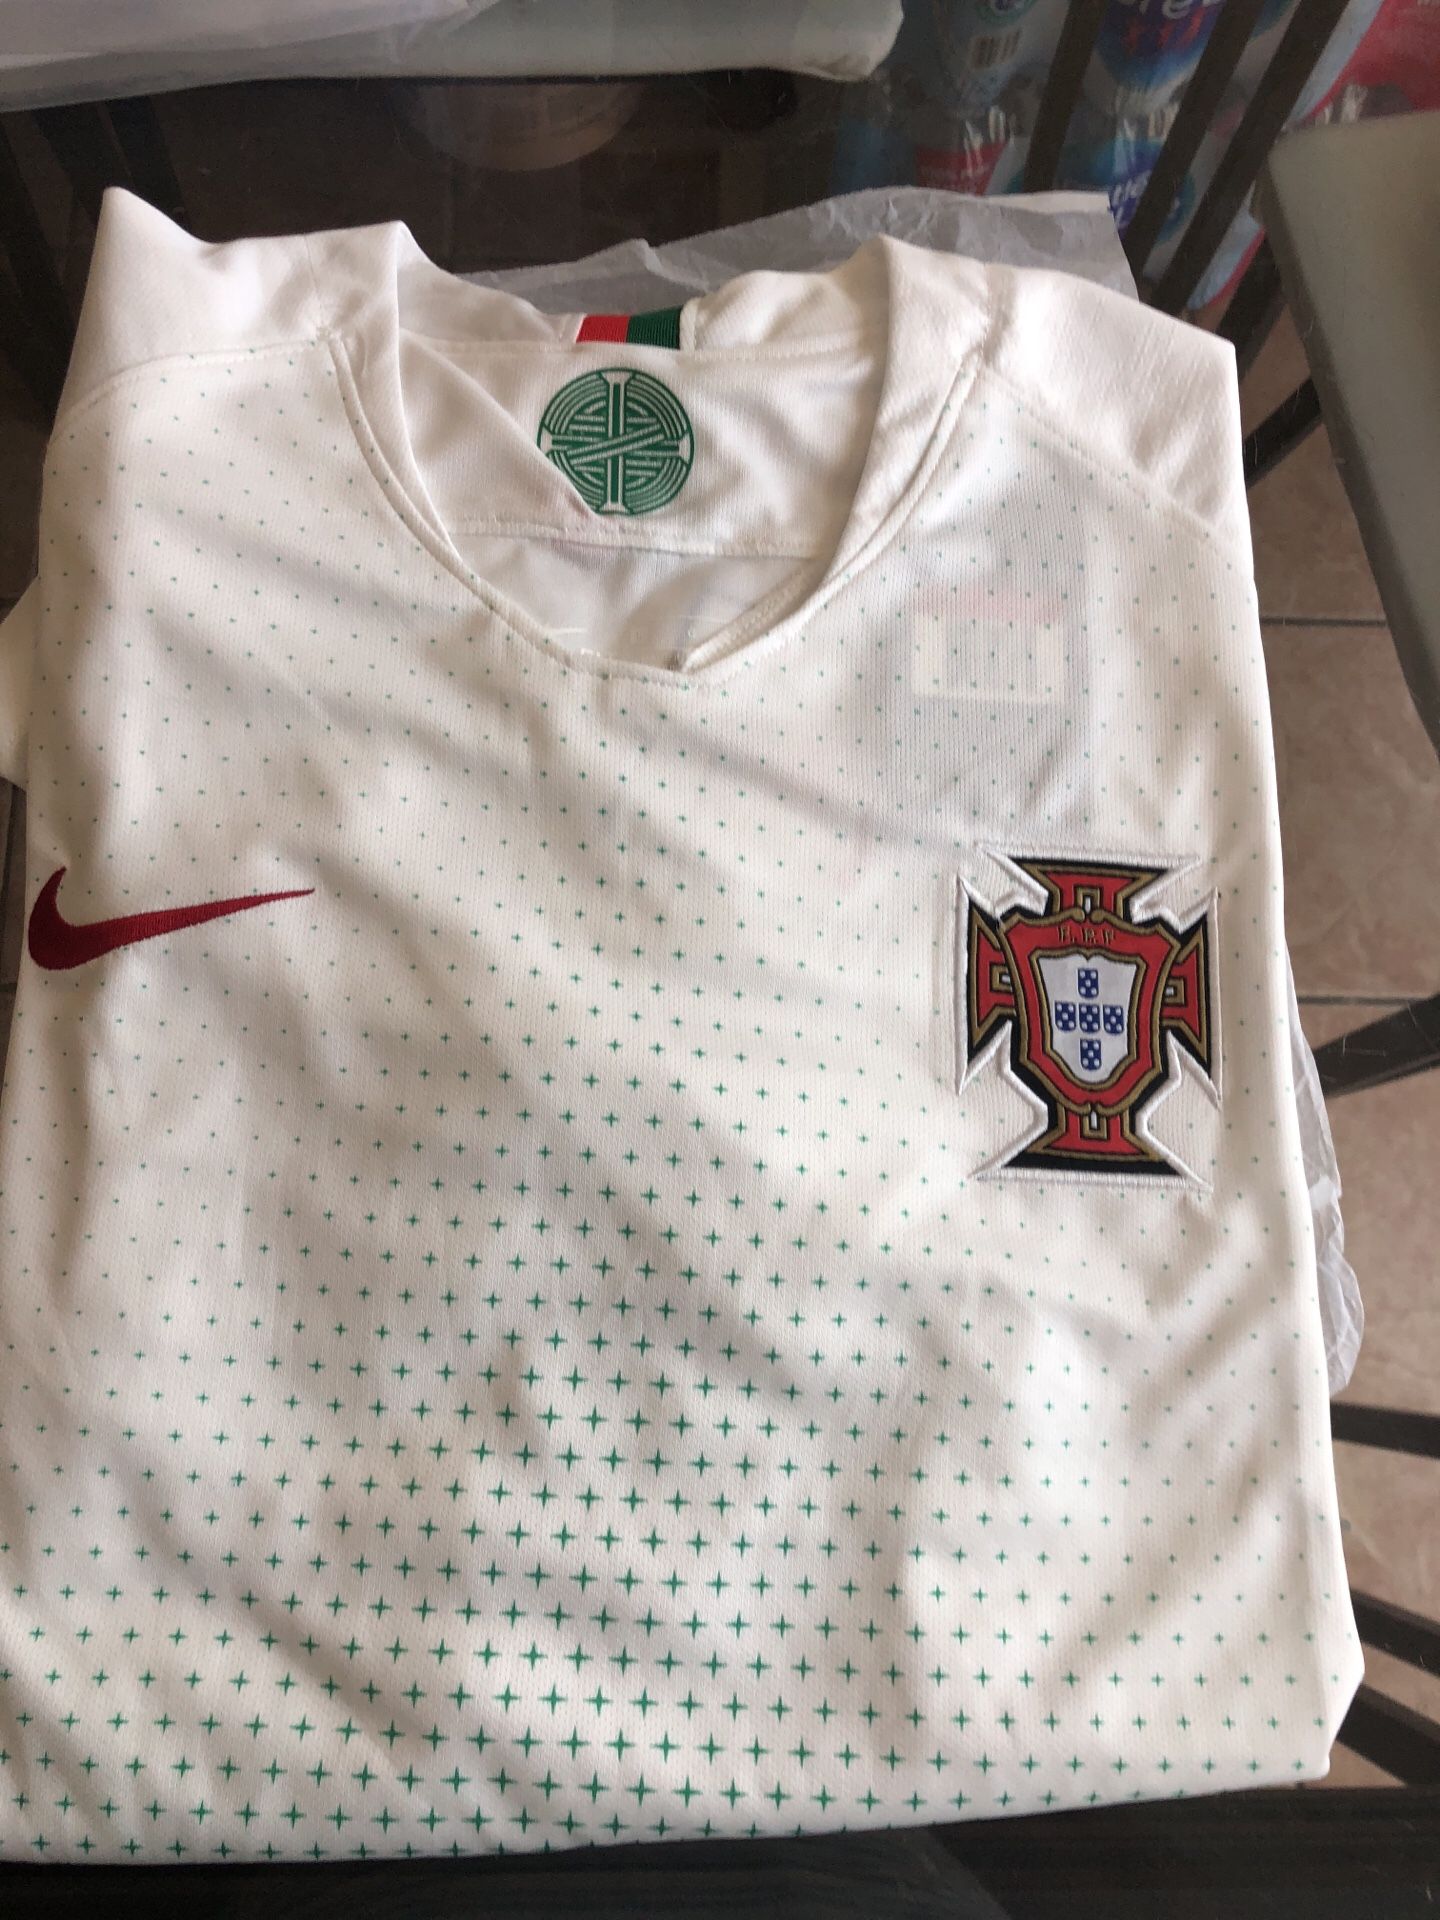 Nike Portugal away jersey